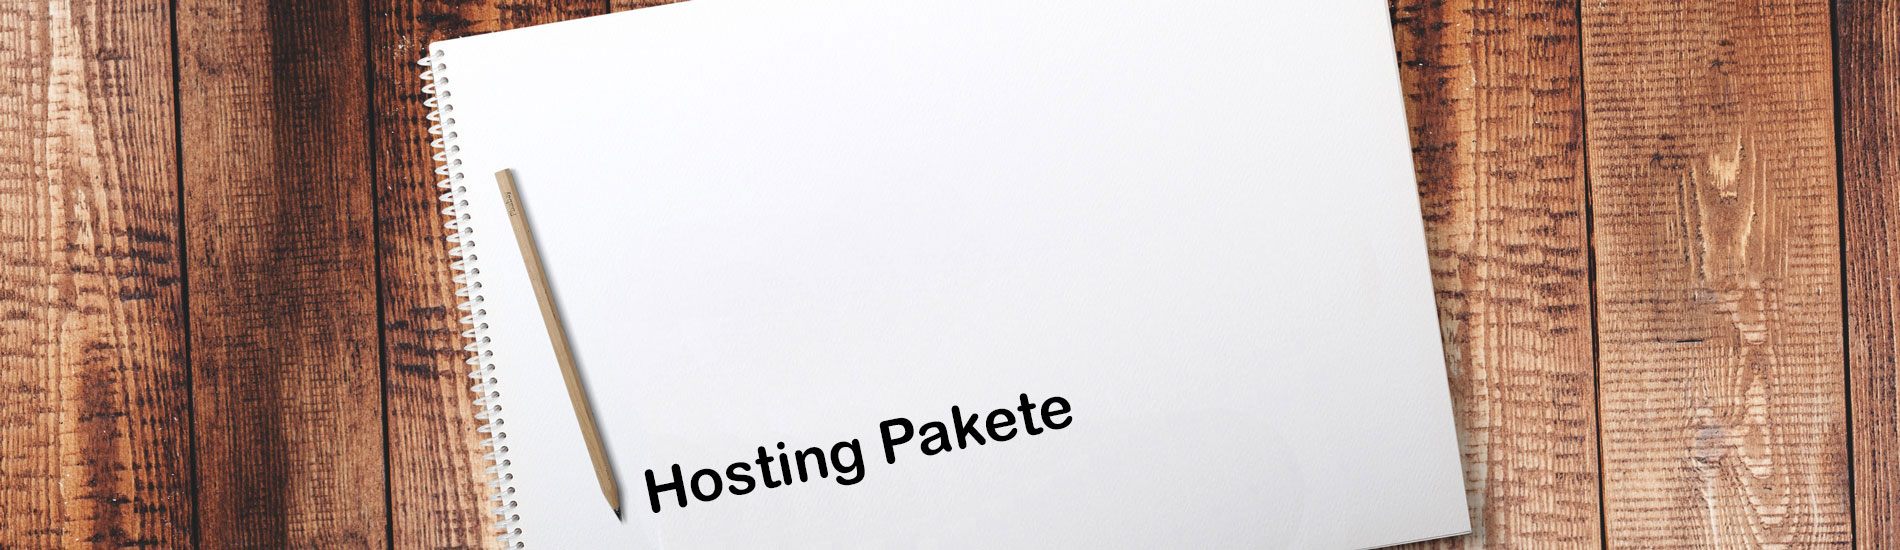 hosting-pakete